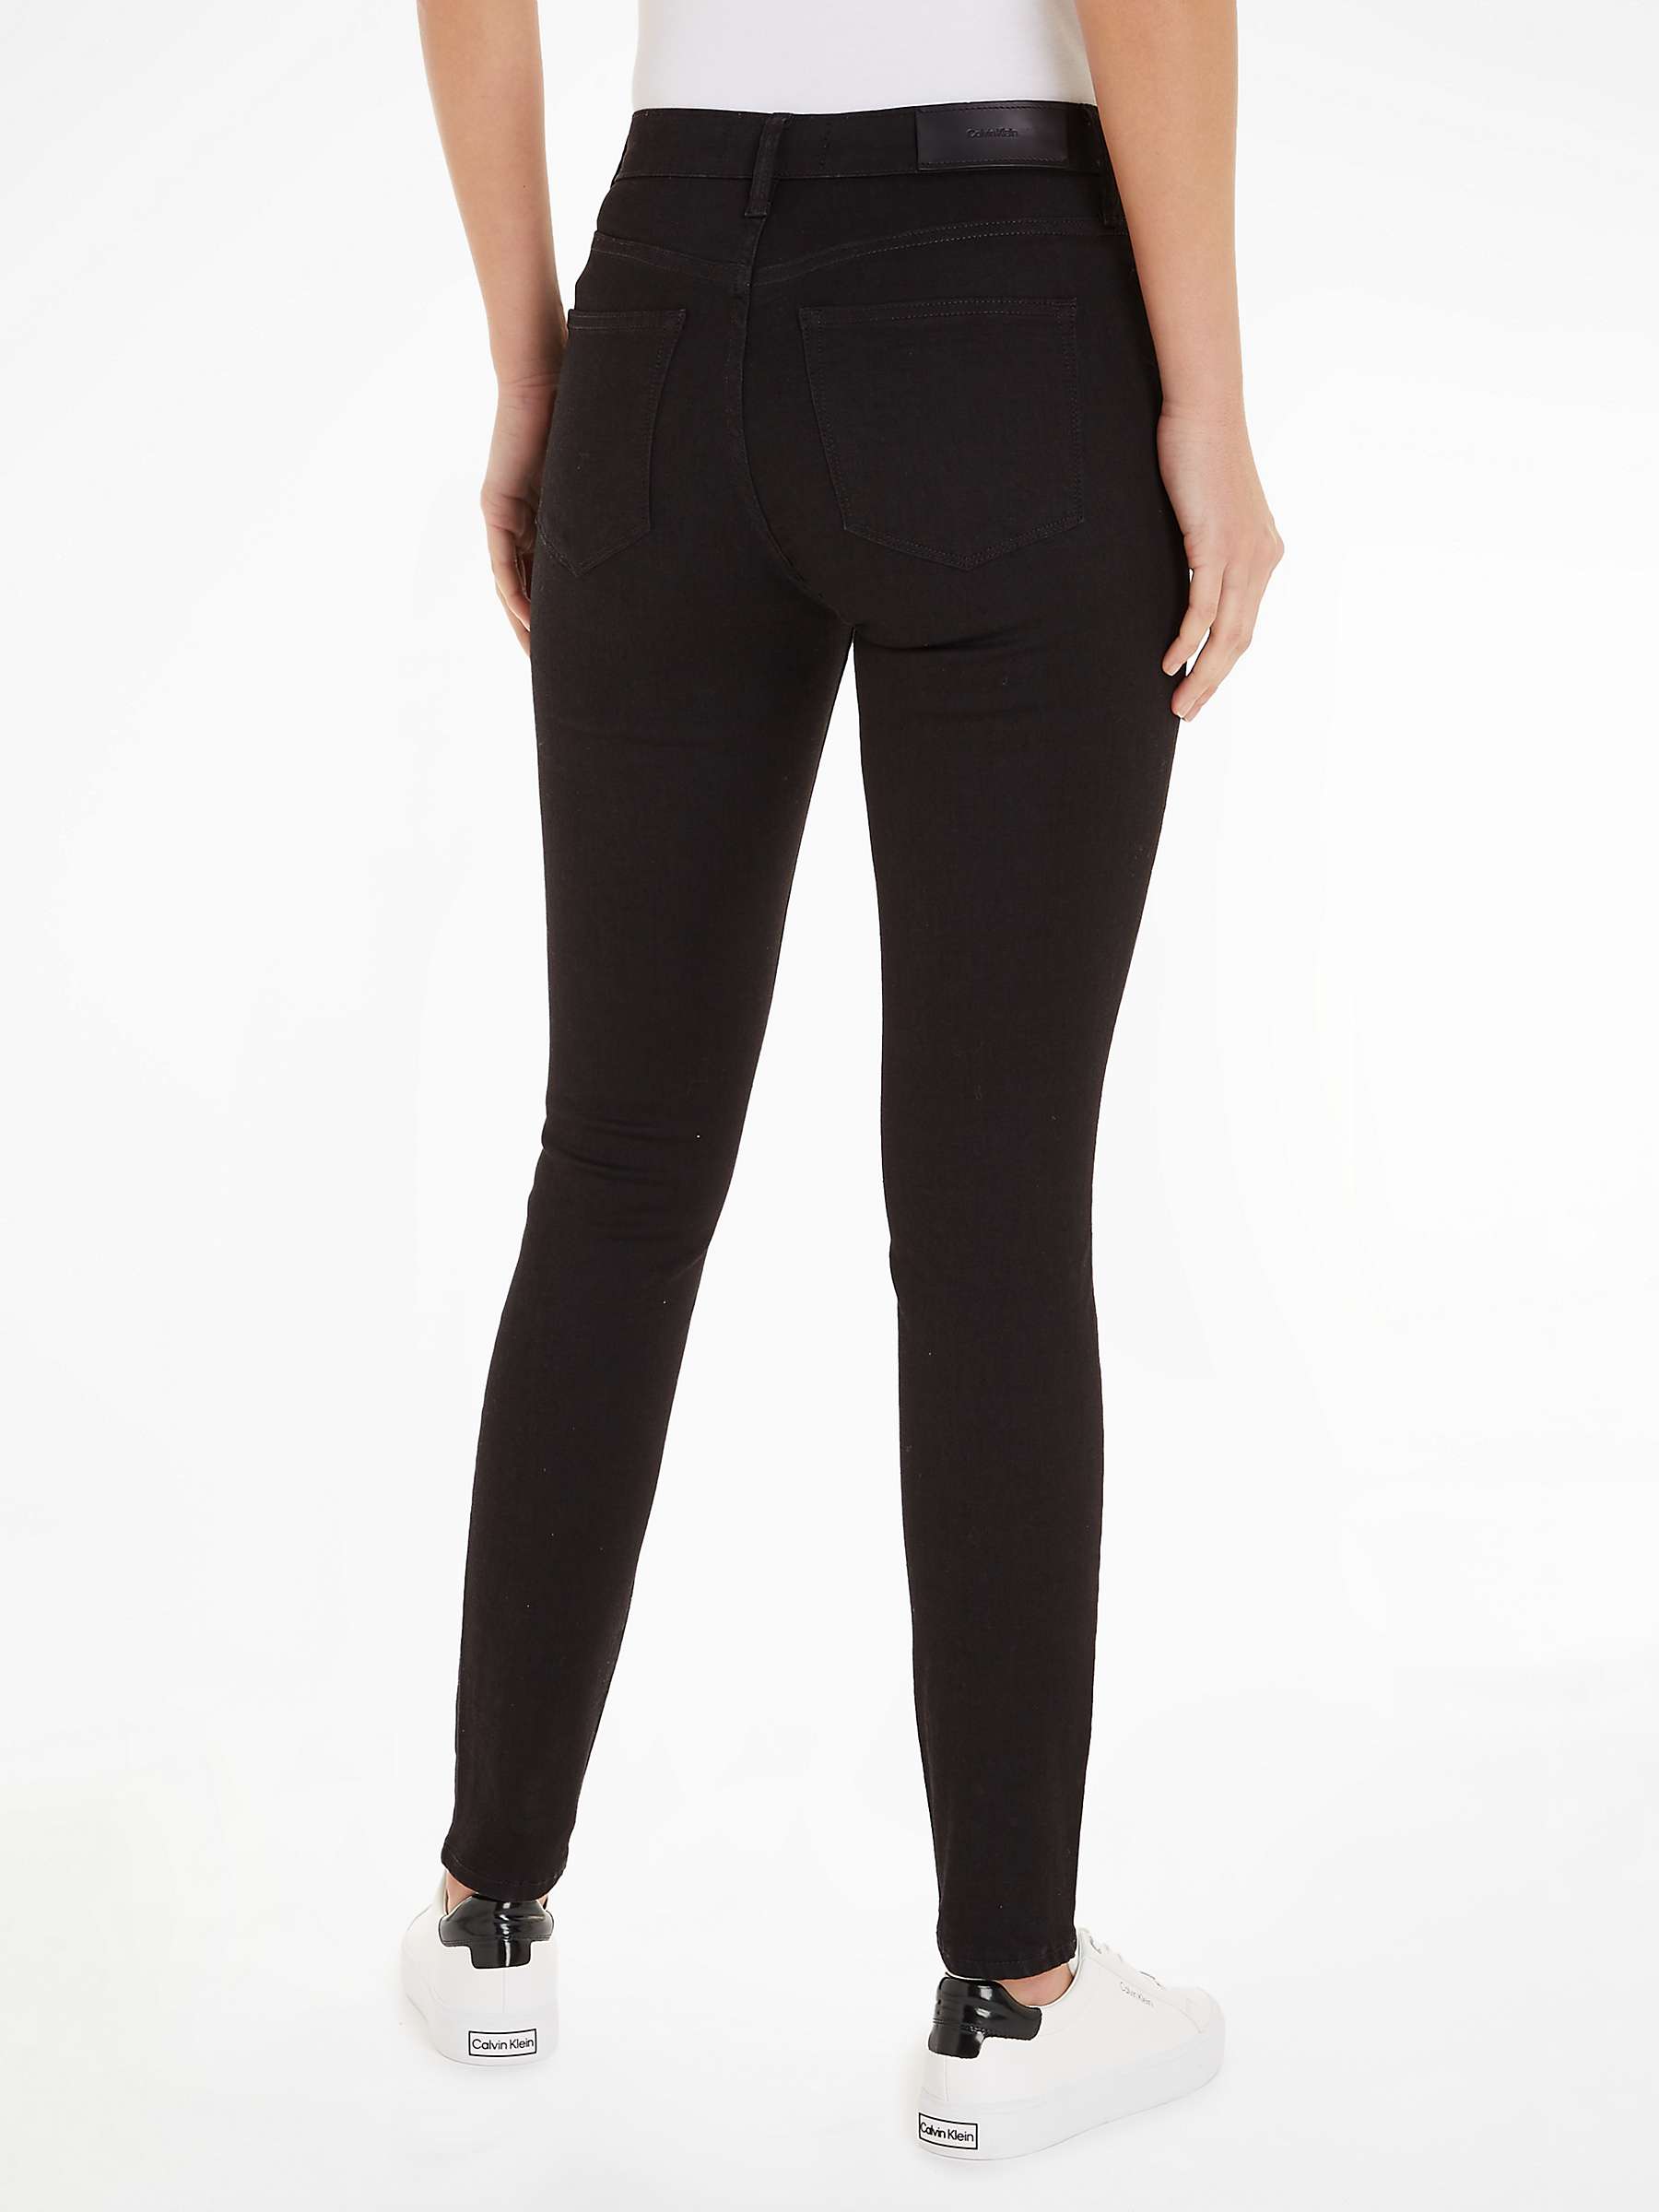 Calvin Klein High Waist Skinny Jeans, Denim Black at John Lewis & Partners